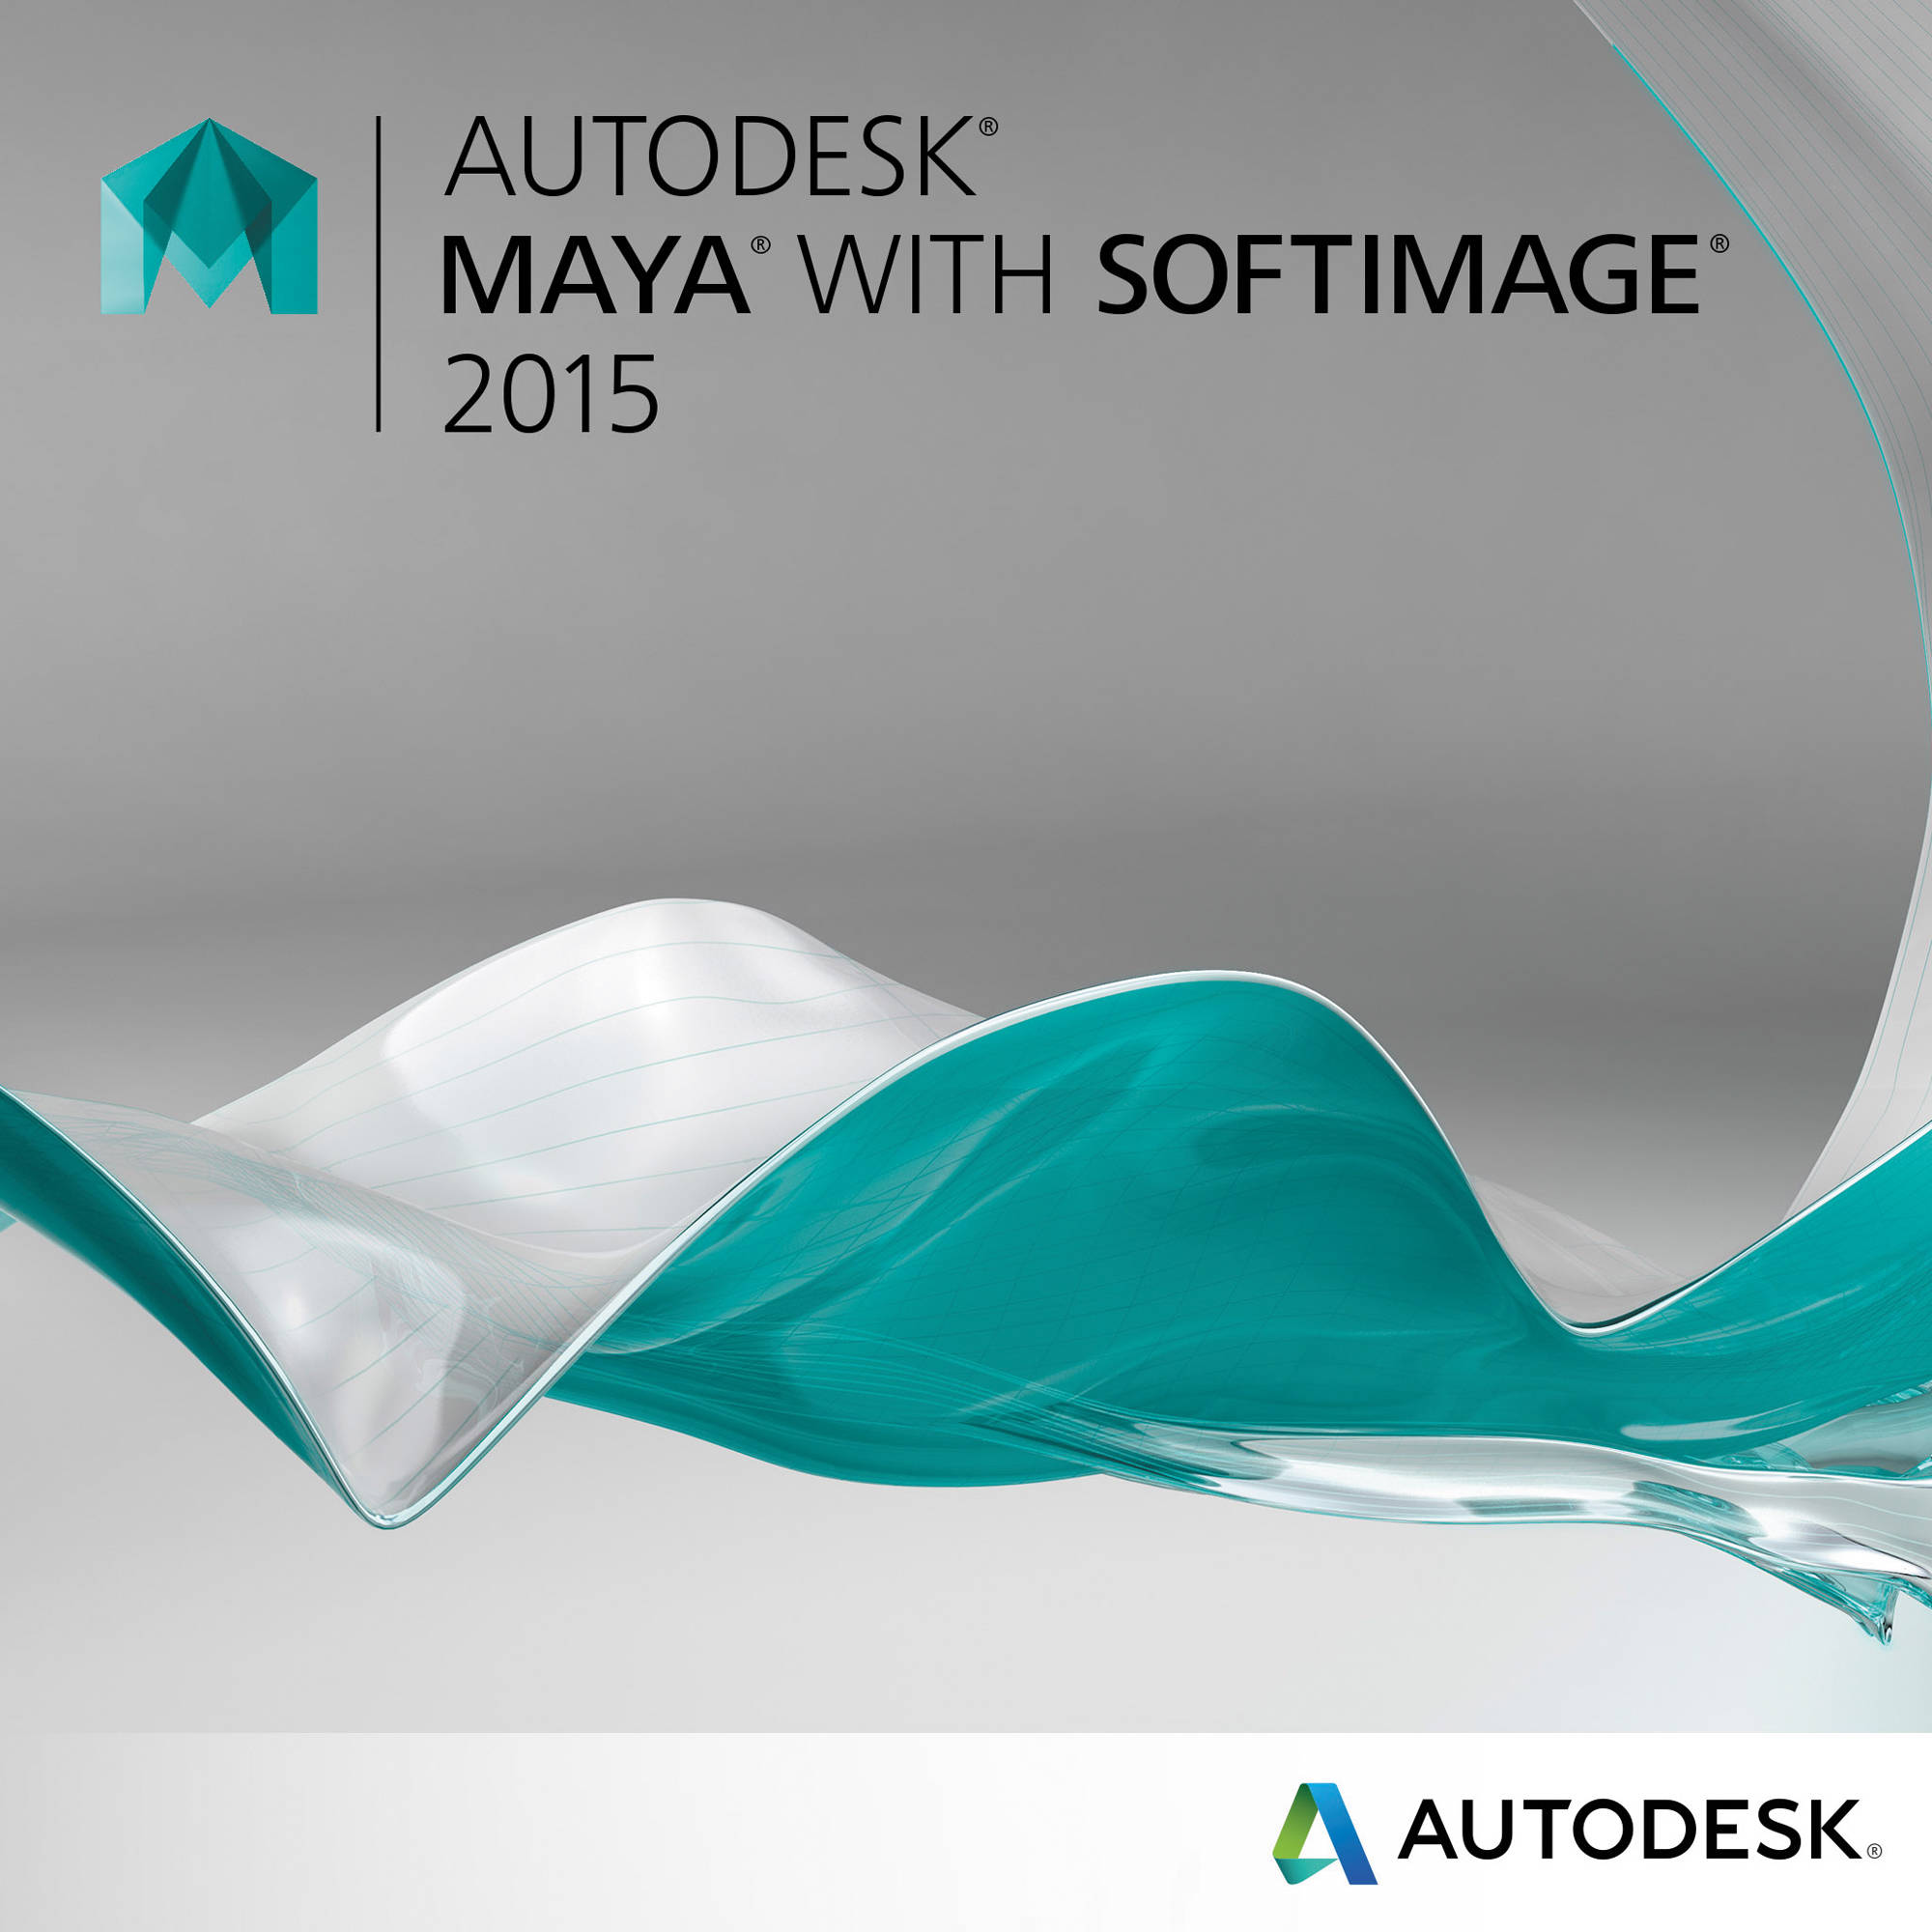 autodesk softimage download